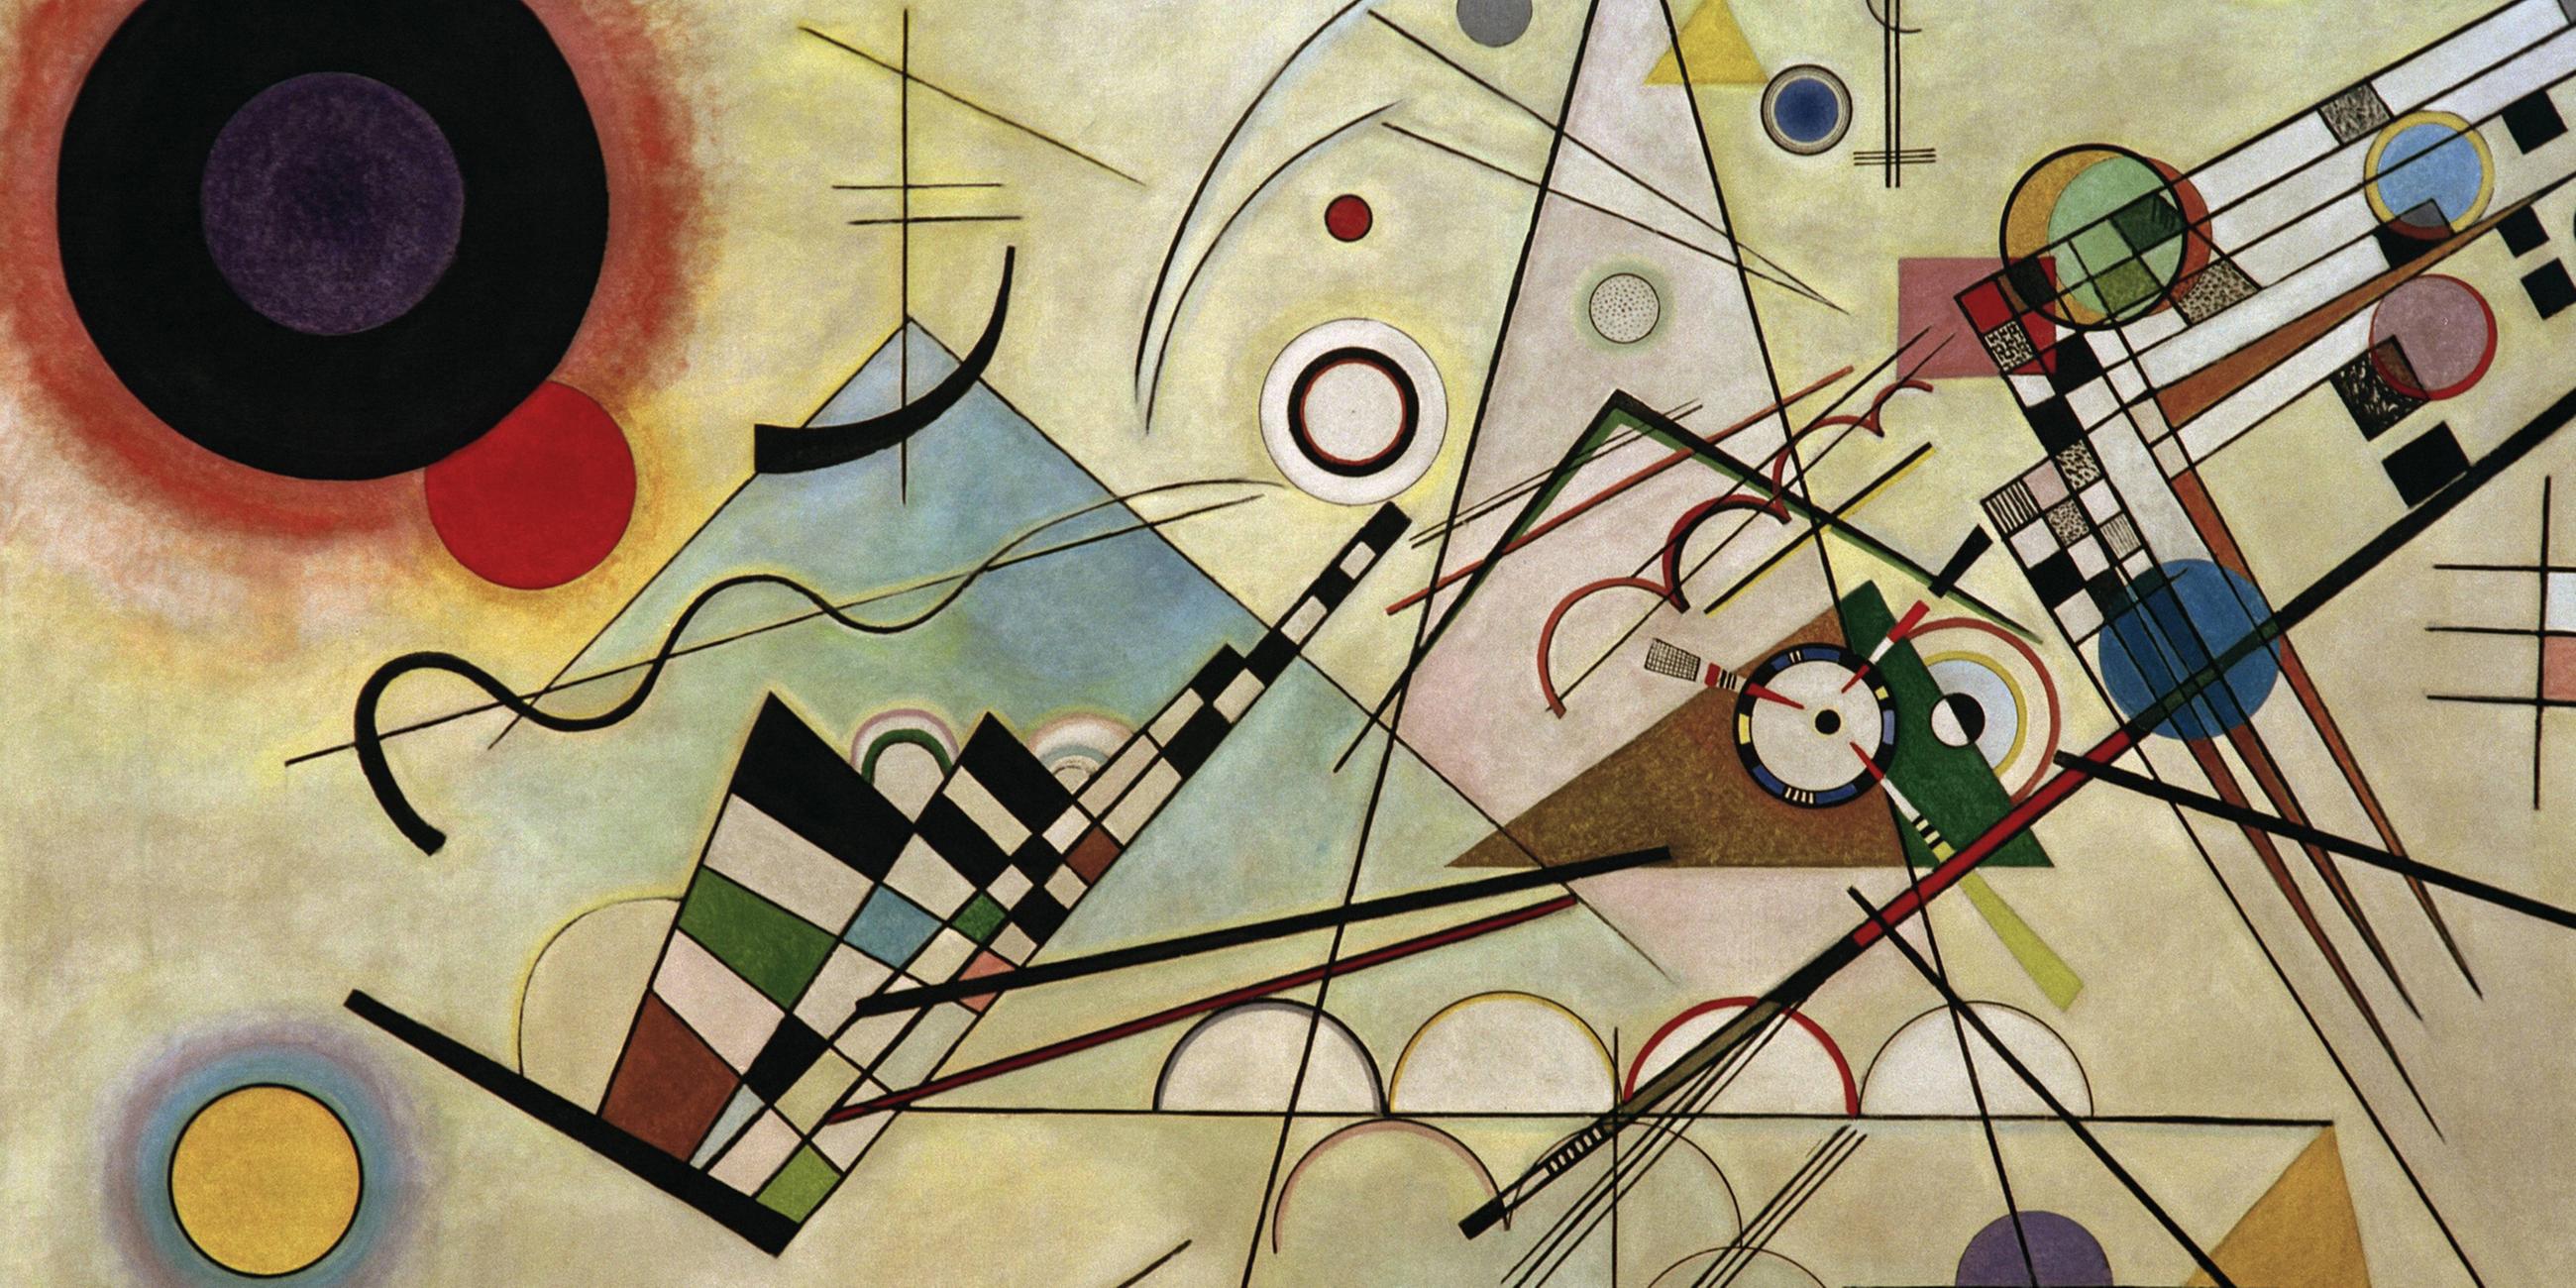 Ölgemälde "Komposition VIII" des Bauhaus-Künstlers Wassily Kandinsky im Guggenheim Museum in New York